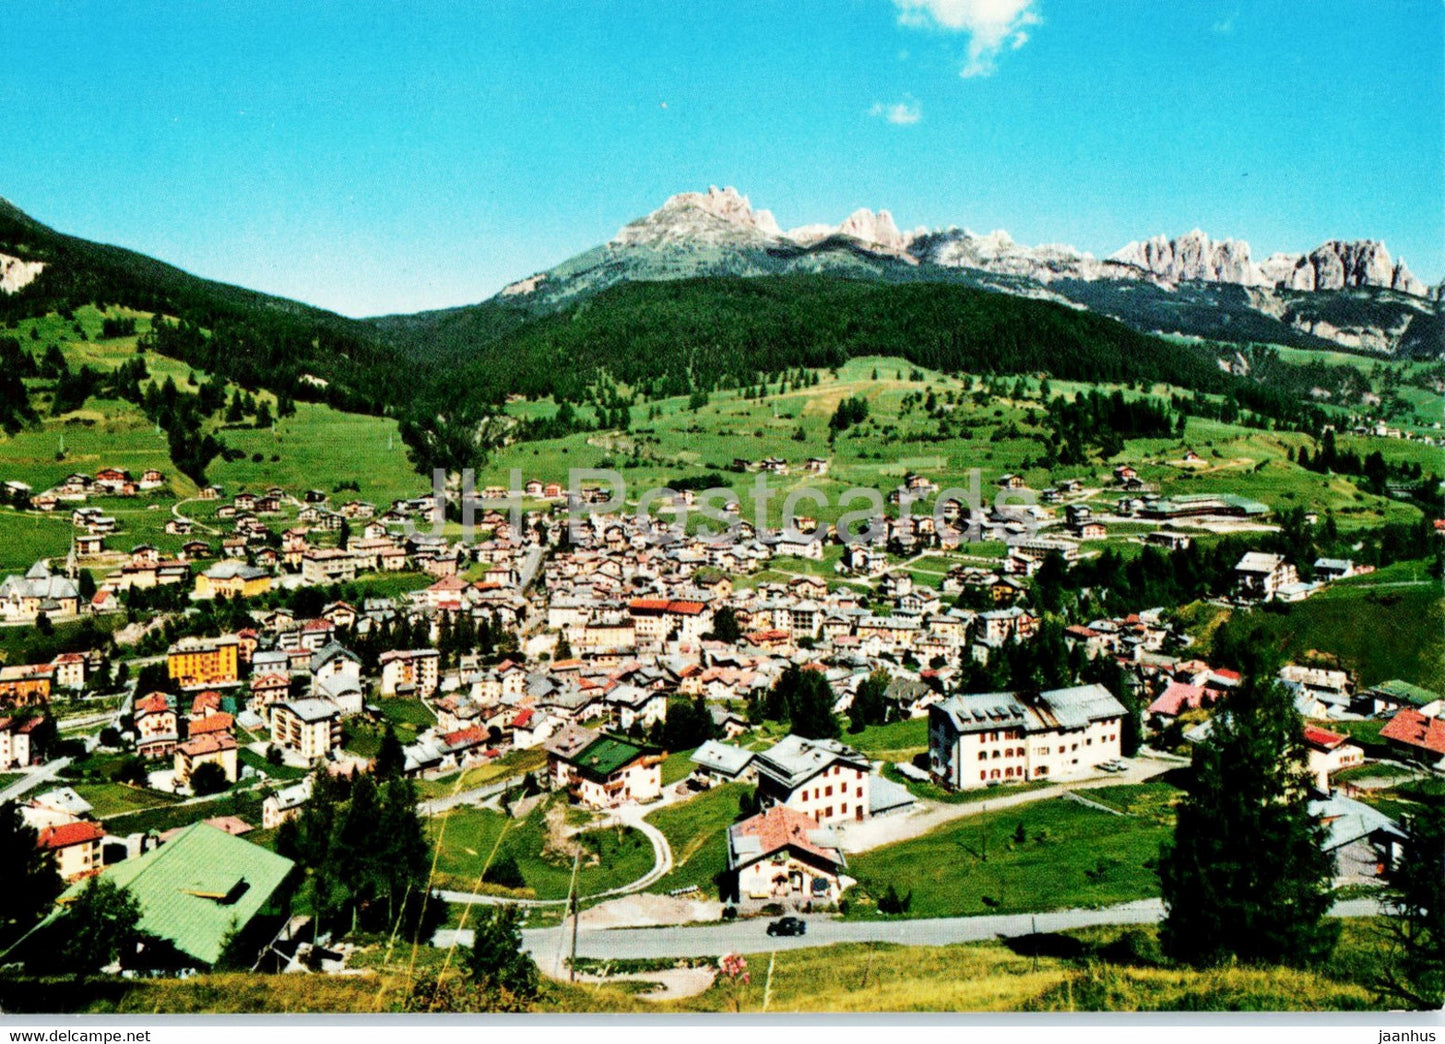 Moena 1200 m - Dolomiti - panorama - General view - Italy - unused - JH Postcards